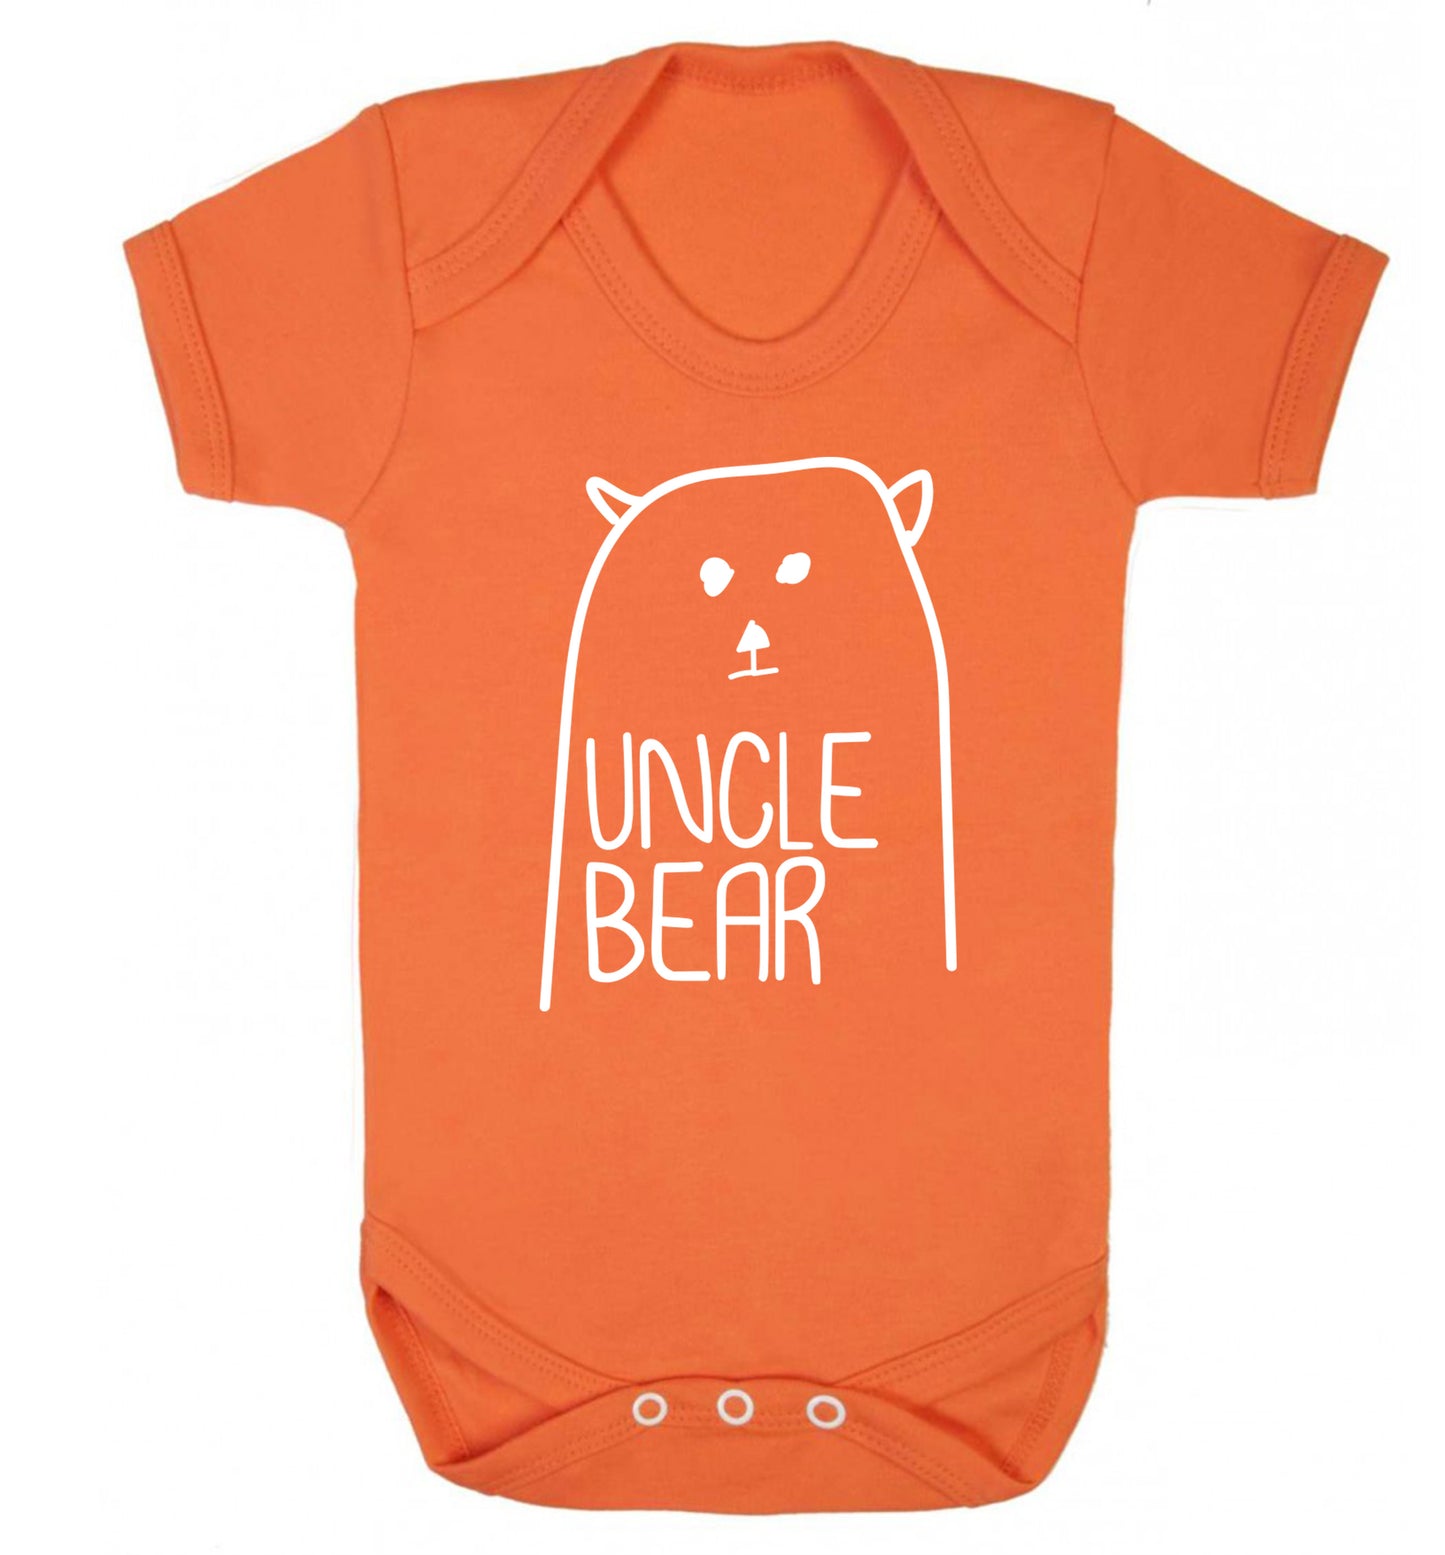 Uncle bear Baby Vest orange 18-24 months